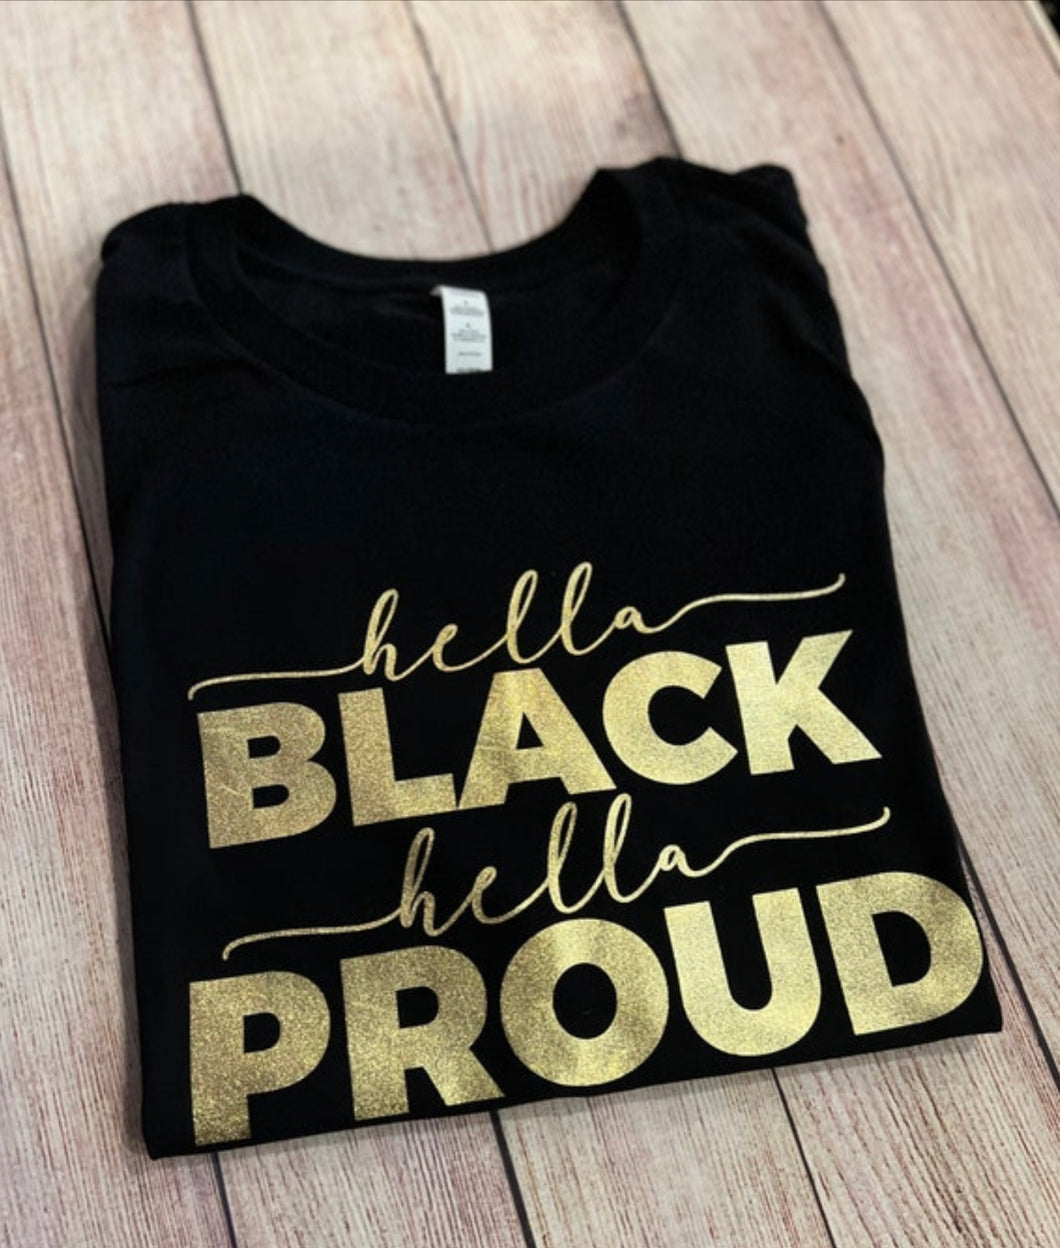 Hella Black/Proud